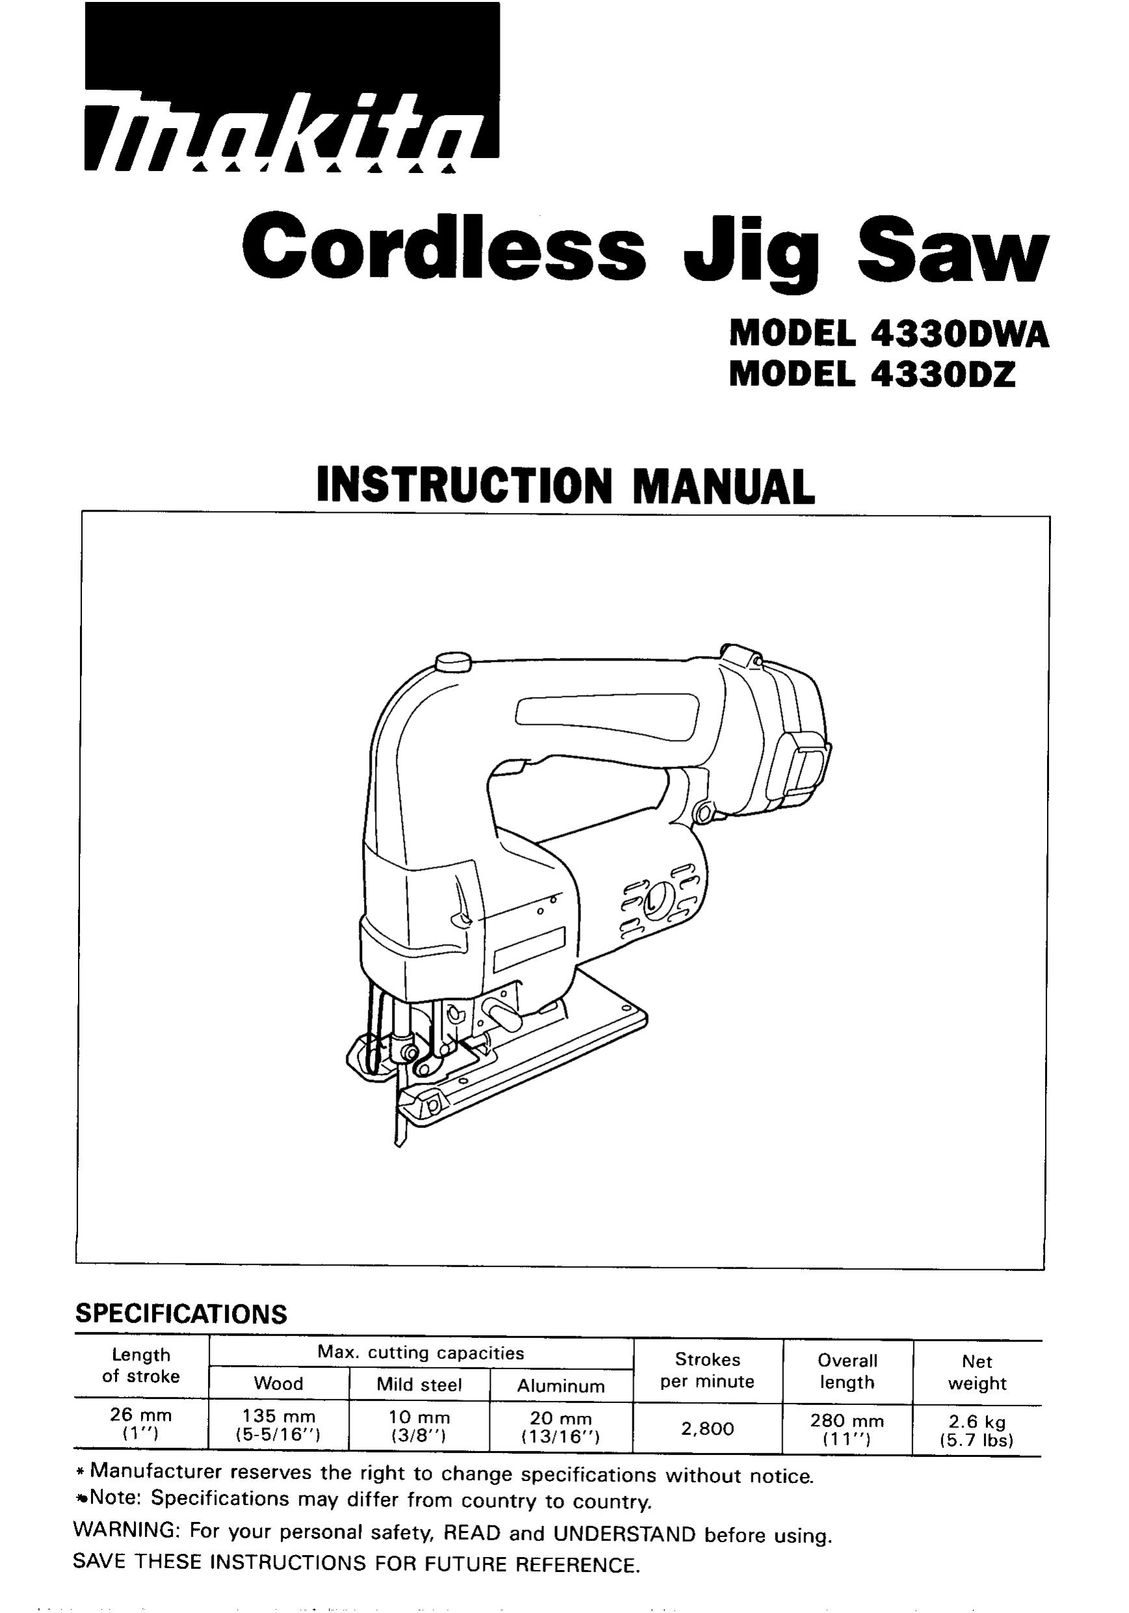 Makita 433ODWA Cordless Saw User Manual